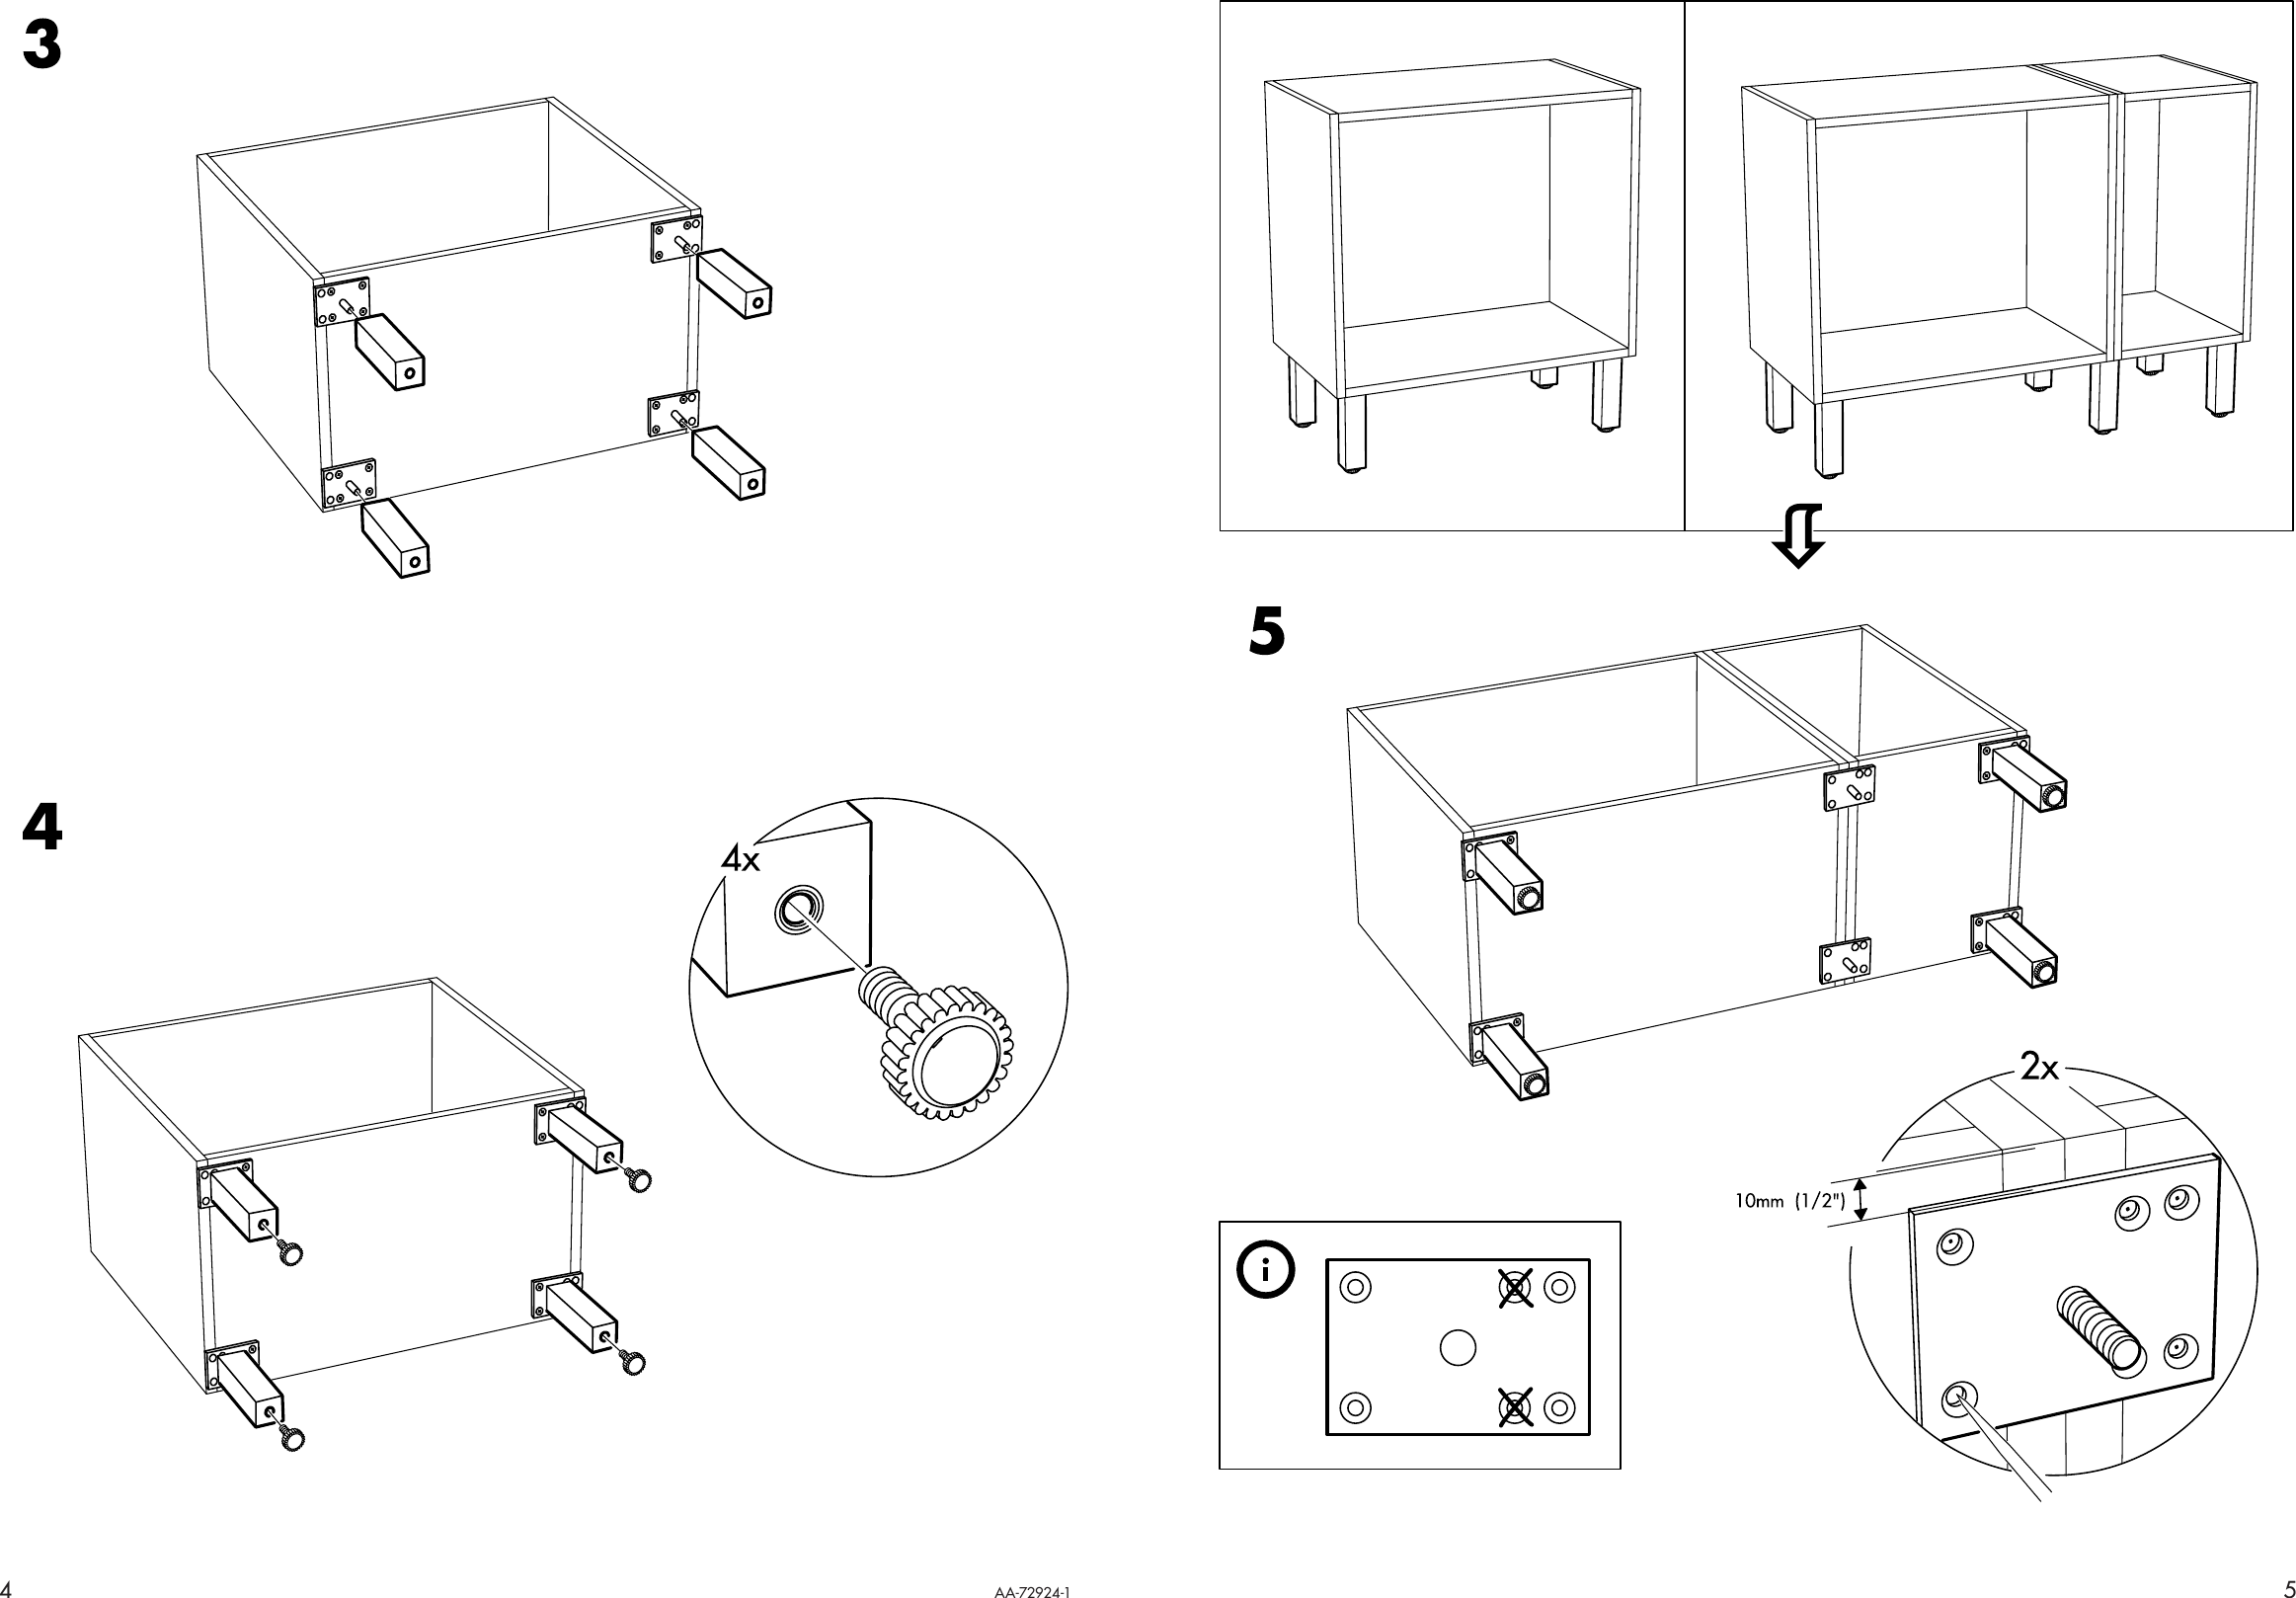 IkeaVatternLeg6144PkAssemblyInstruction.619440969 User Guide Page 4 